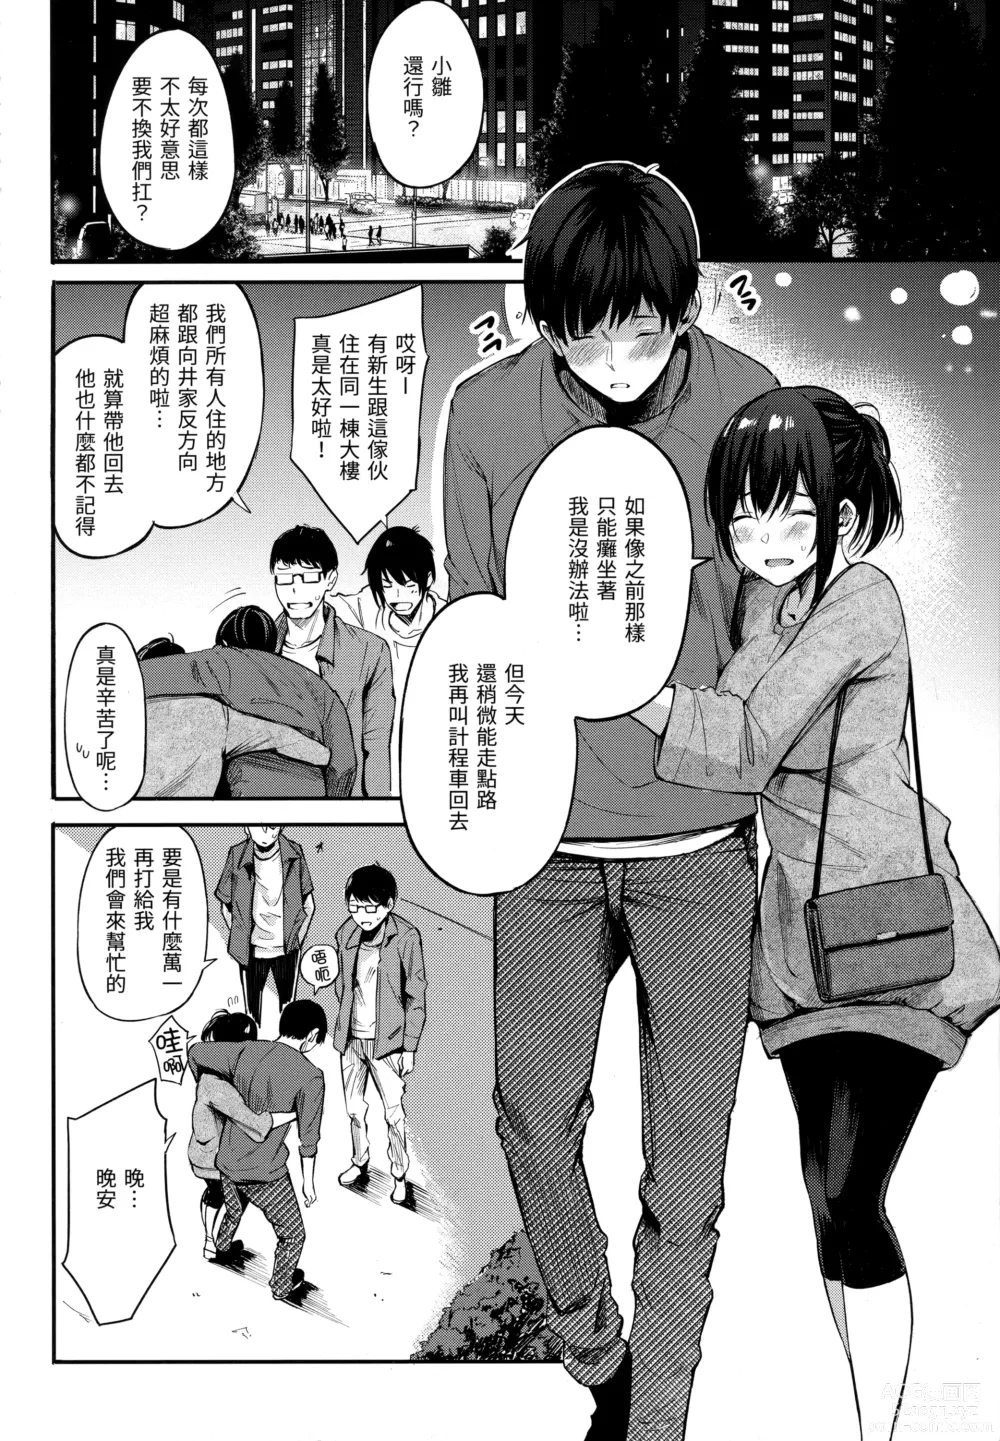 Page 10 of manga 祕密x祕密 (uncensored)